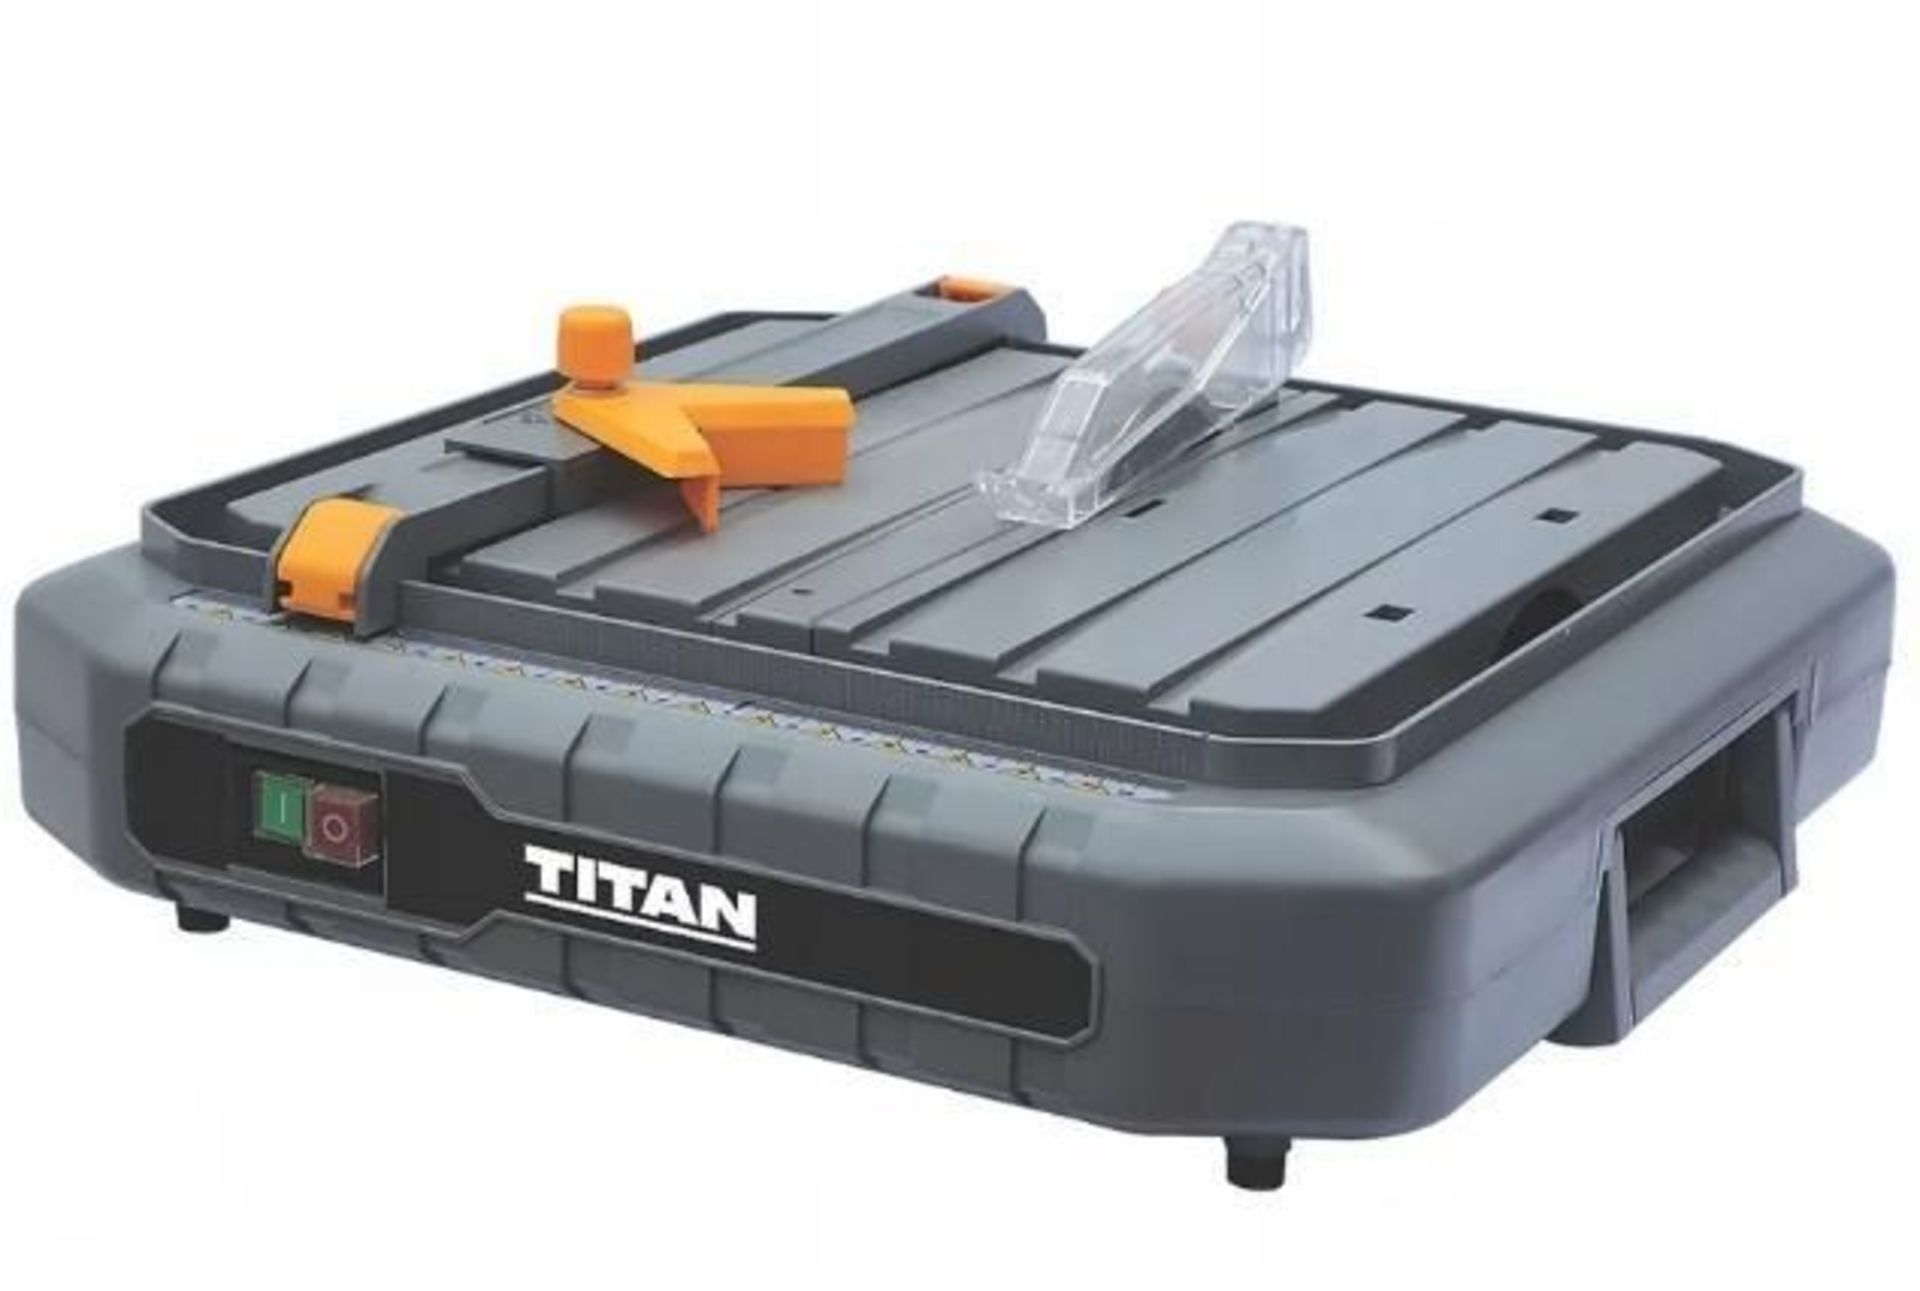 Titan Tile Cutter Saw 115 Mm Electric Cutting Machine Heavy Duty 500W 240V - R14.14. - Image 2 of 2